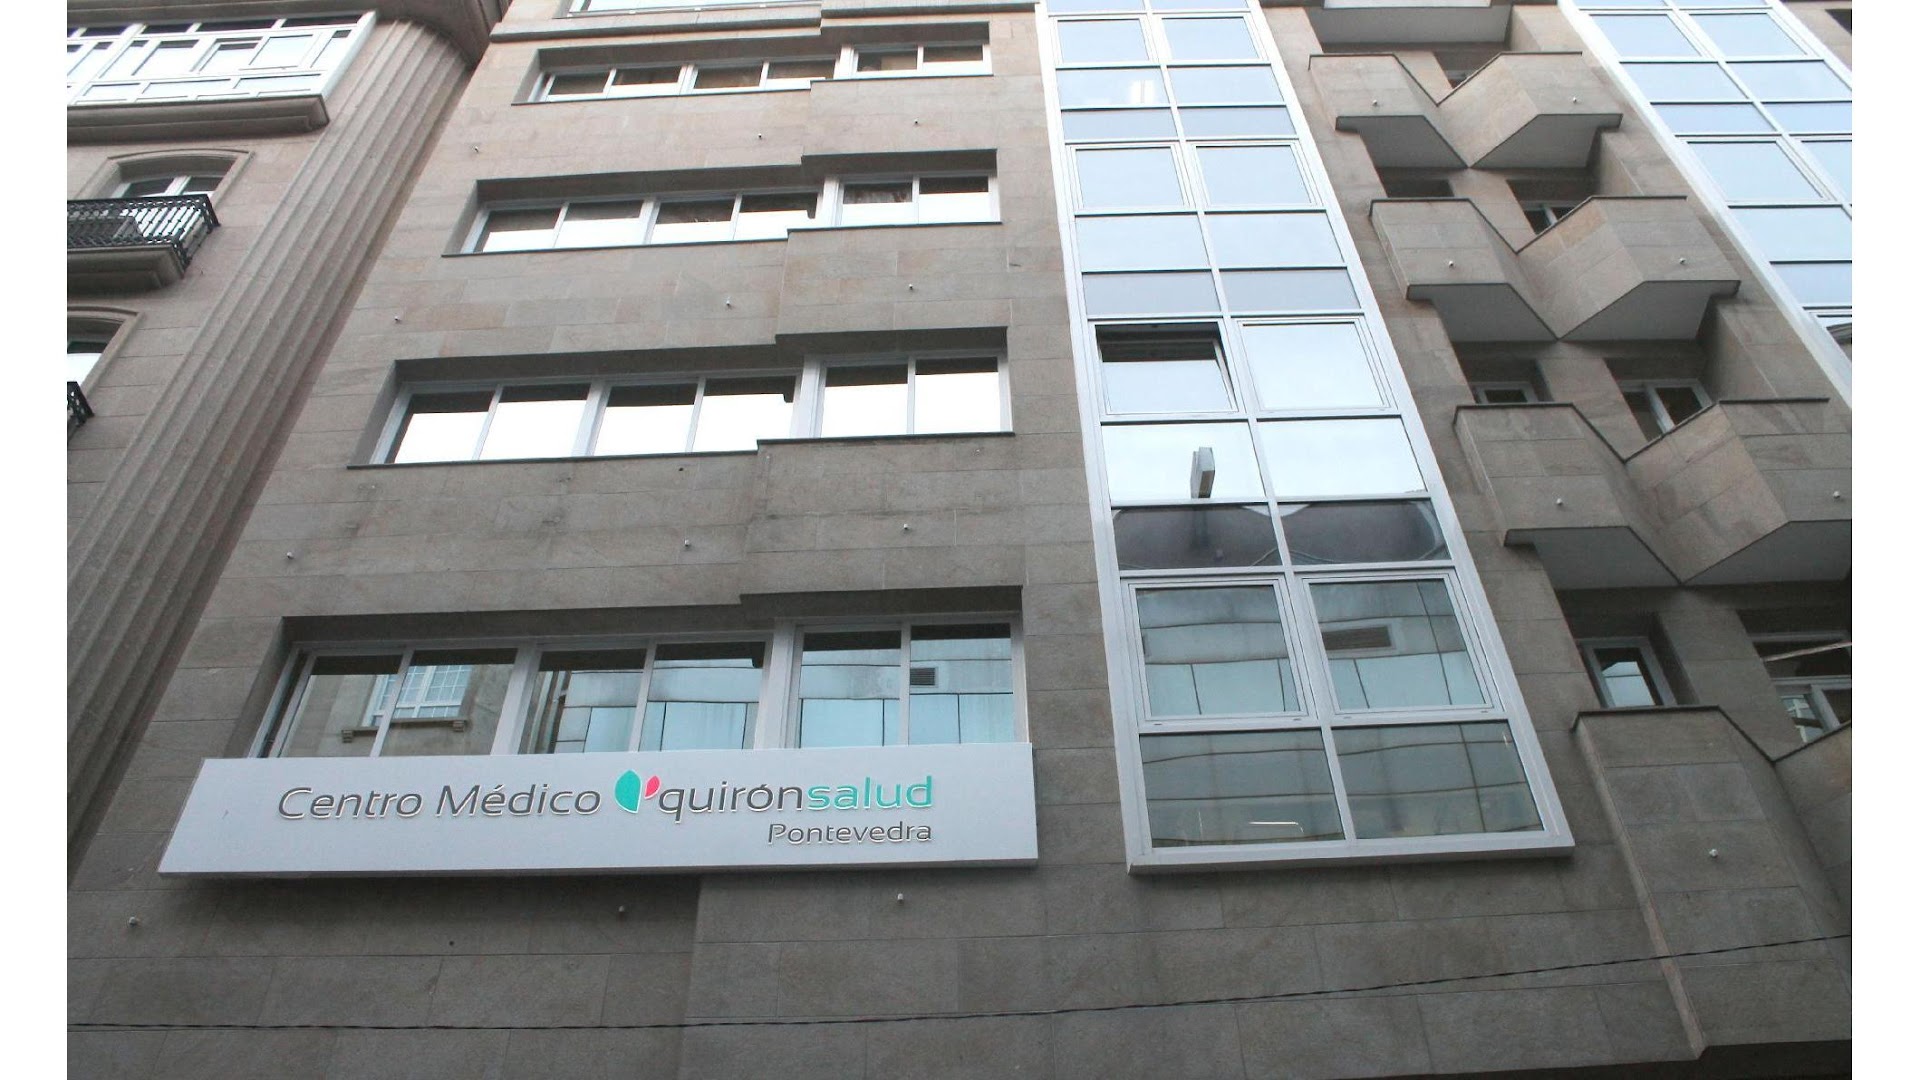 Centro Médico Quirónsalud Pontevedra